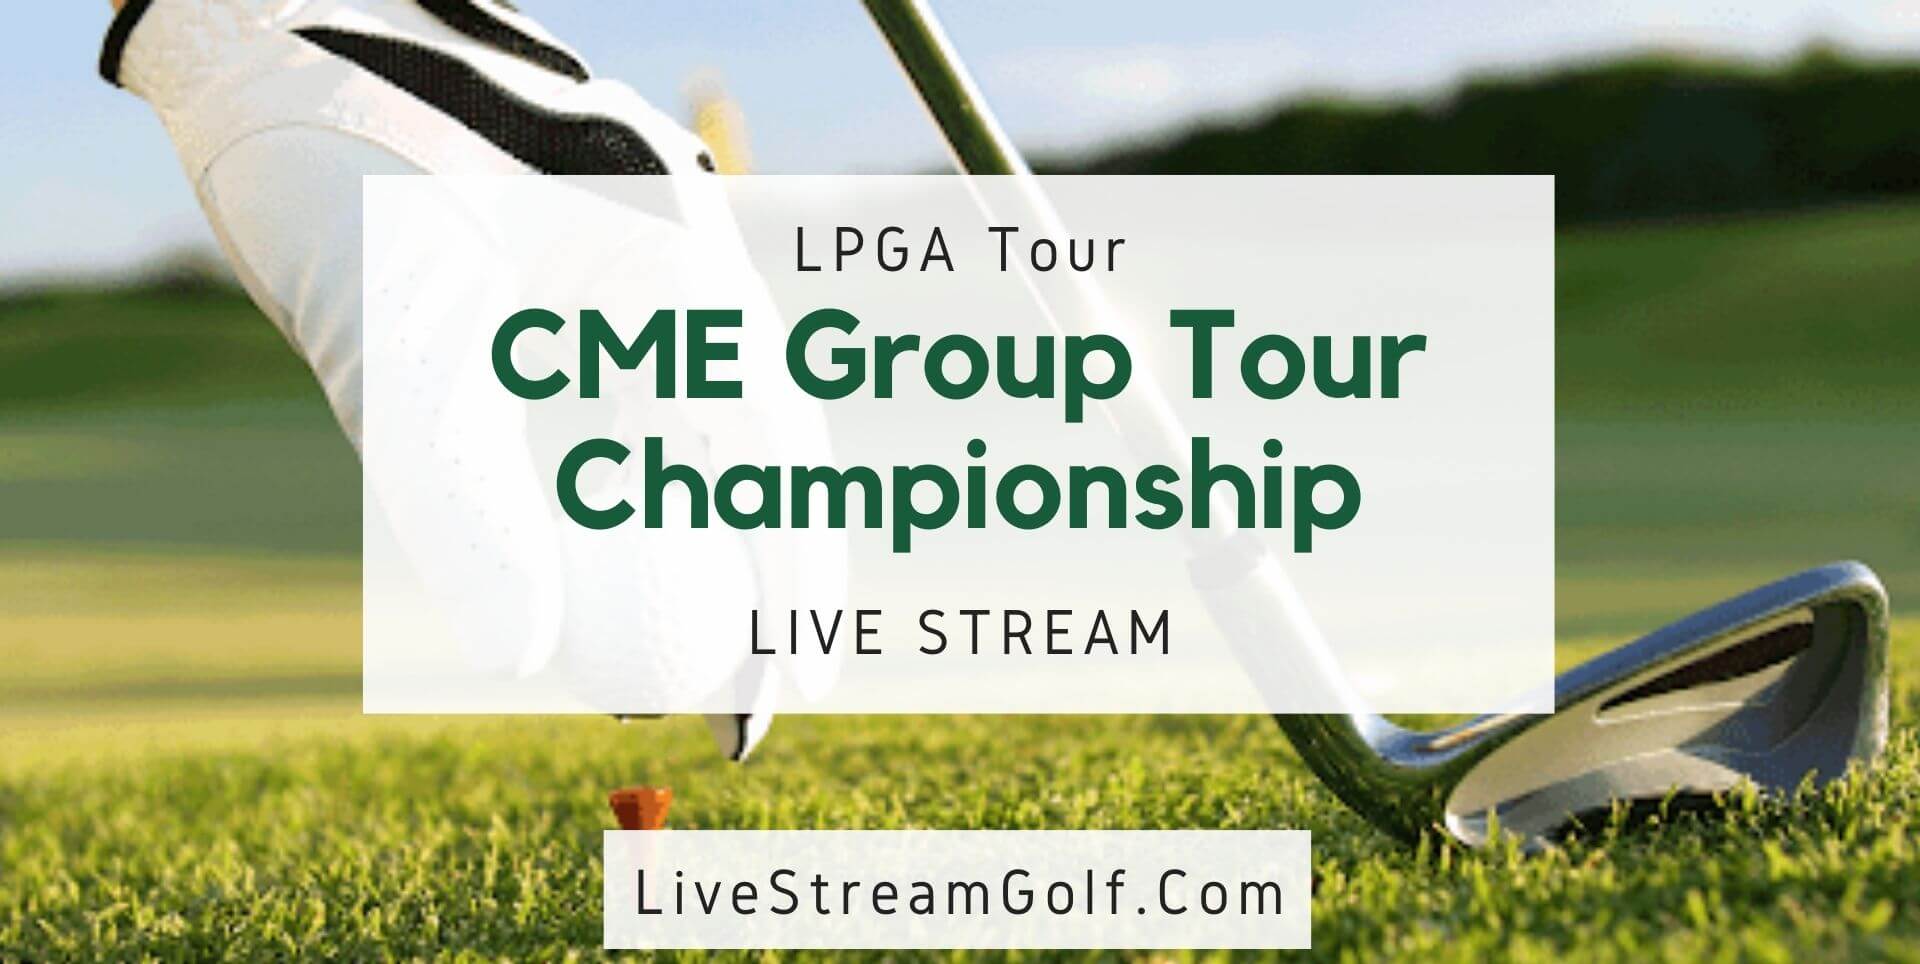 CME Group Tour Championship Day 2 Live Stream: LPGA Tour 2022